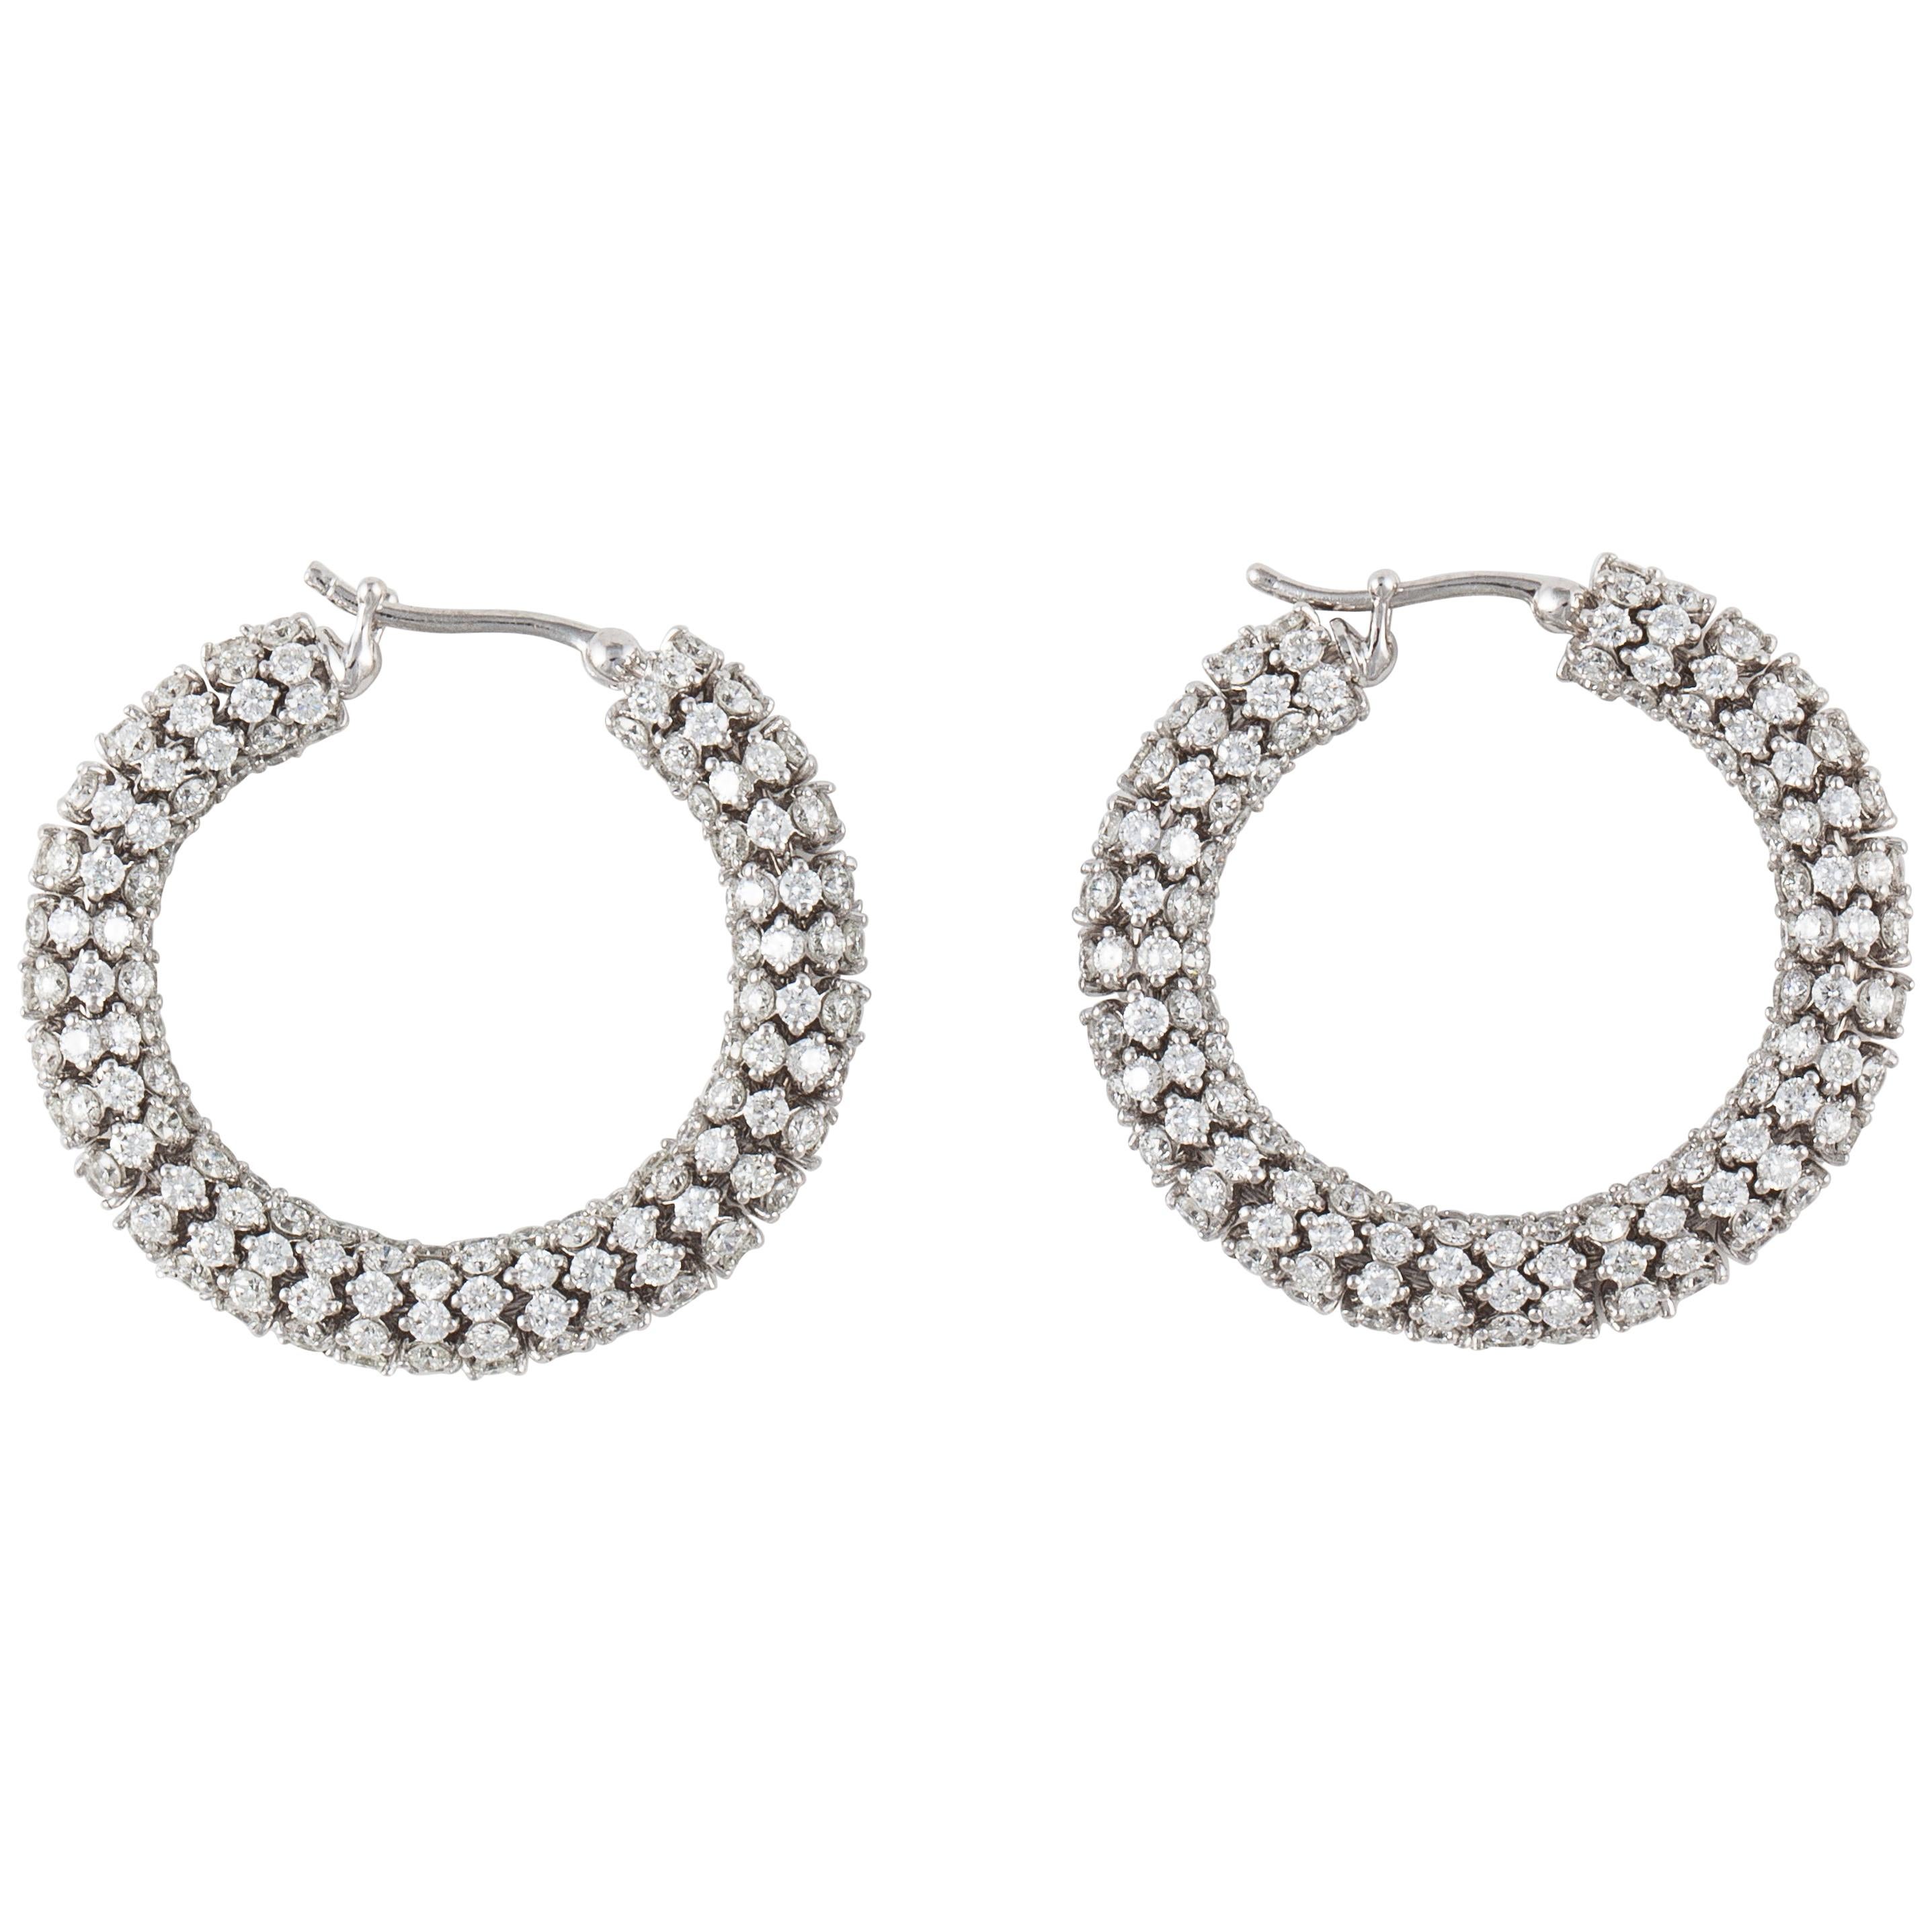 Diamond Rondel Hoop Earrings in 18K White Gold